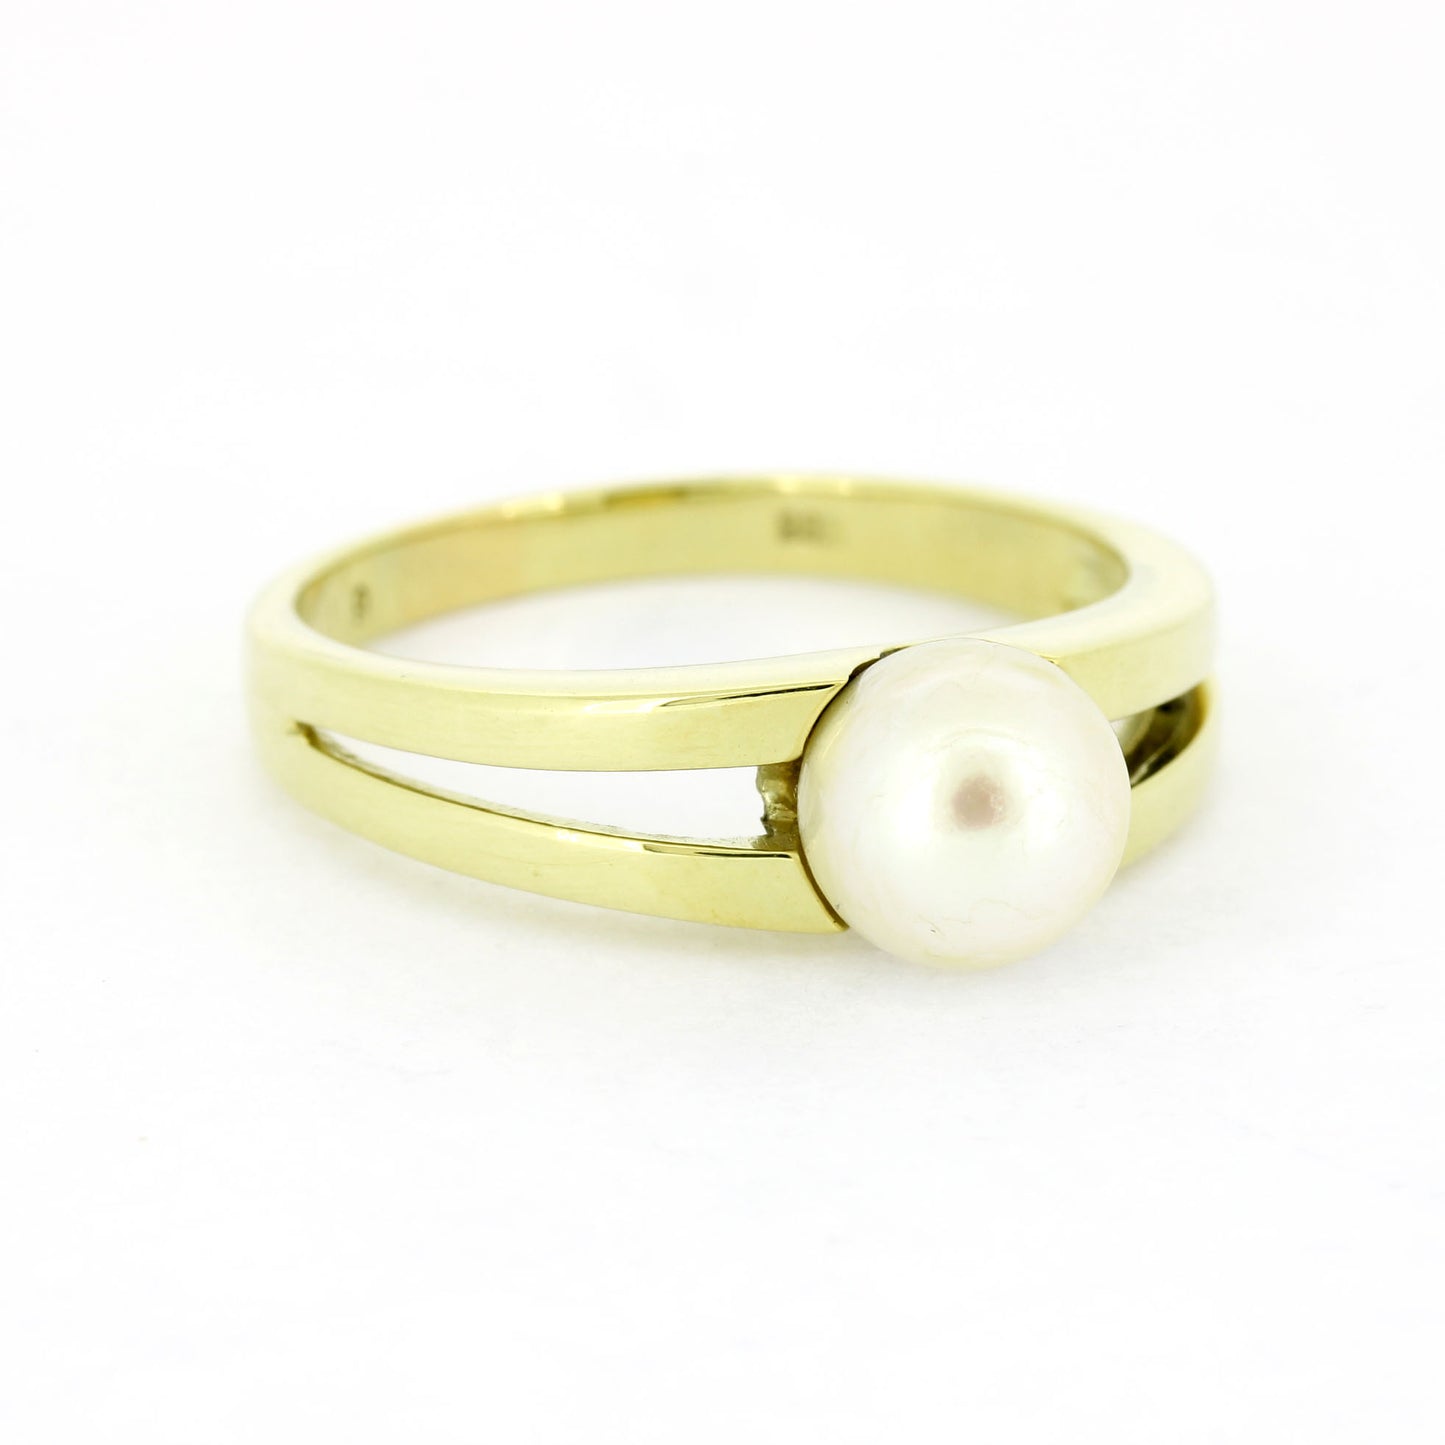 Perlen Ring 585 Gold 14 Kt Gelbgold - Wert 279,-